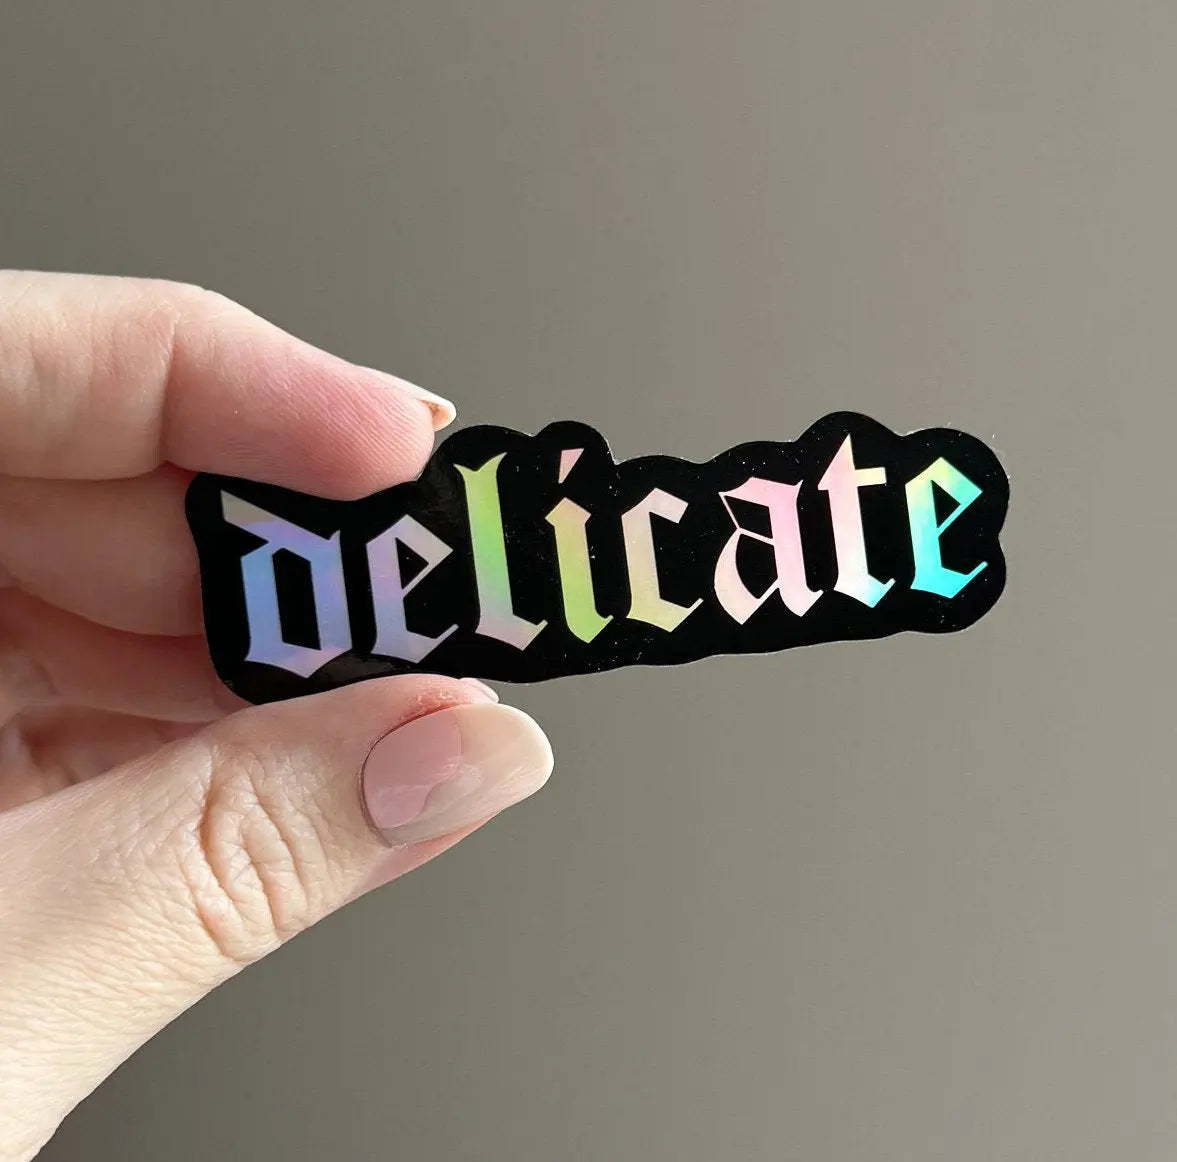 Delicate sticker MangoIllustrated